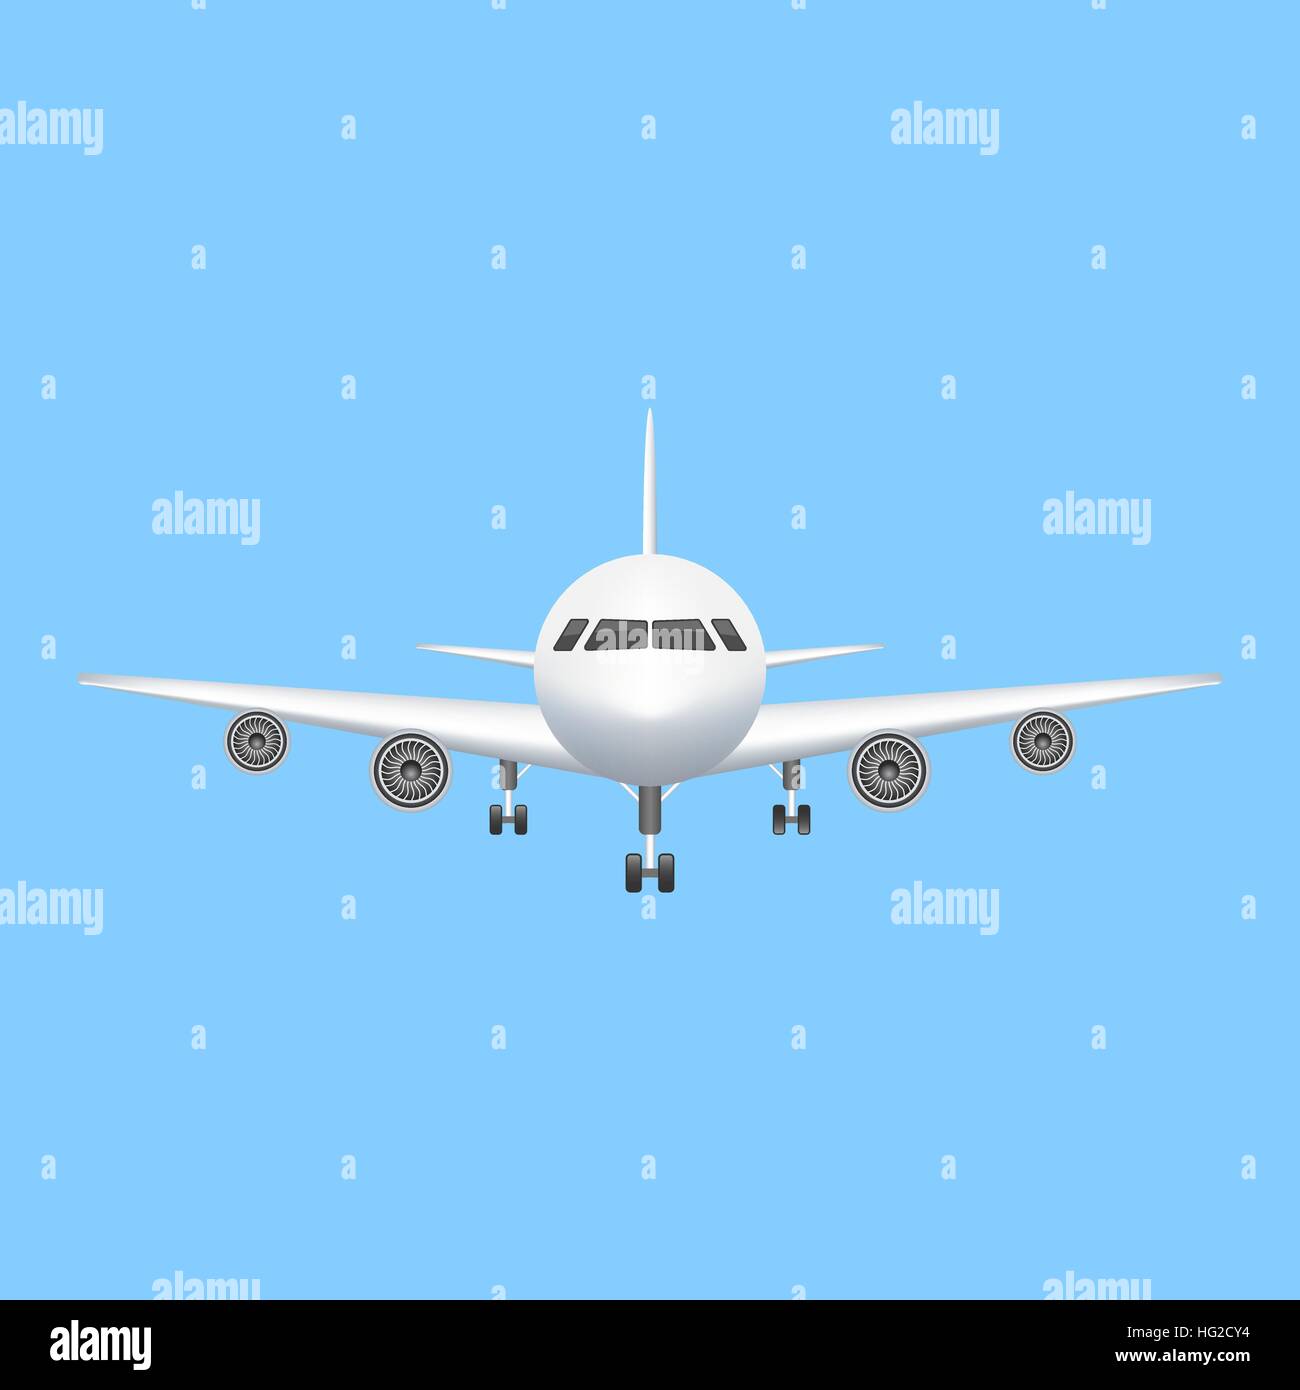 Airplane icon vector aviation illustration Stock Vector